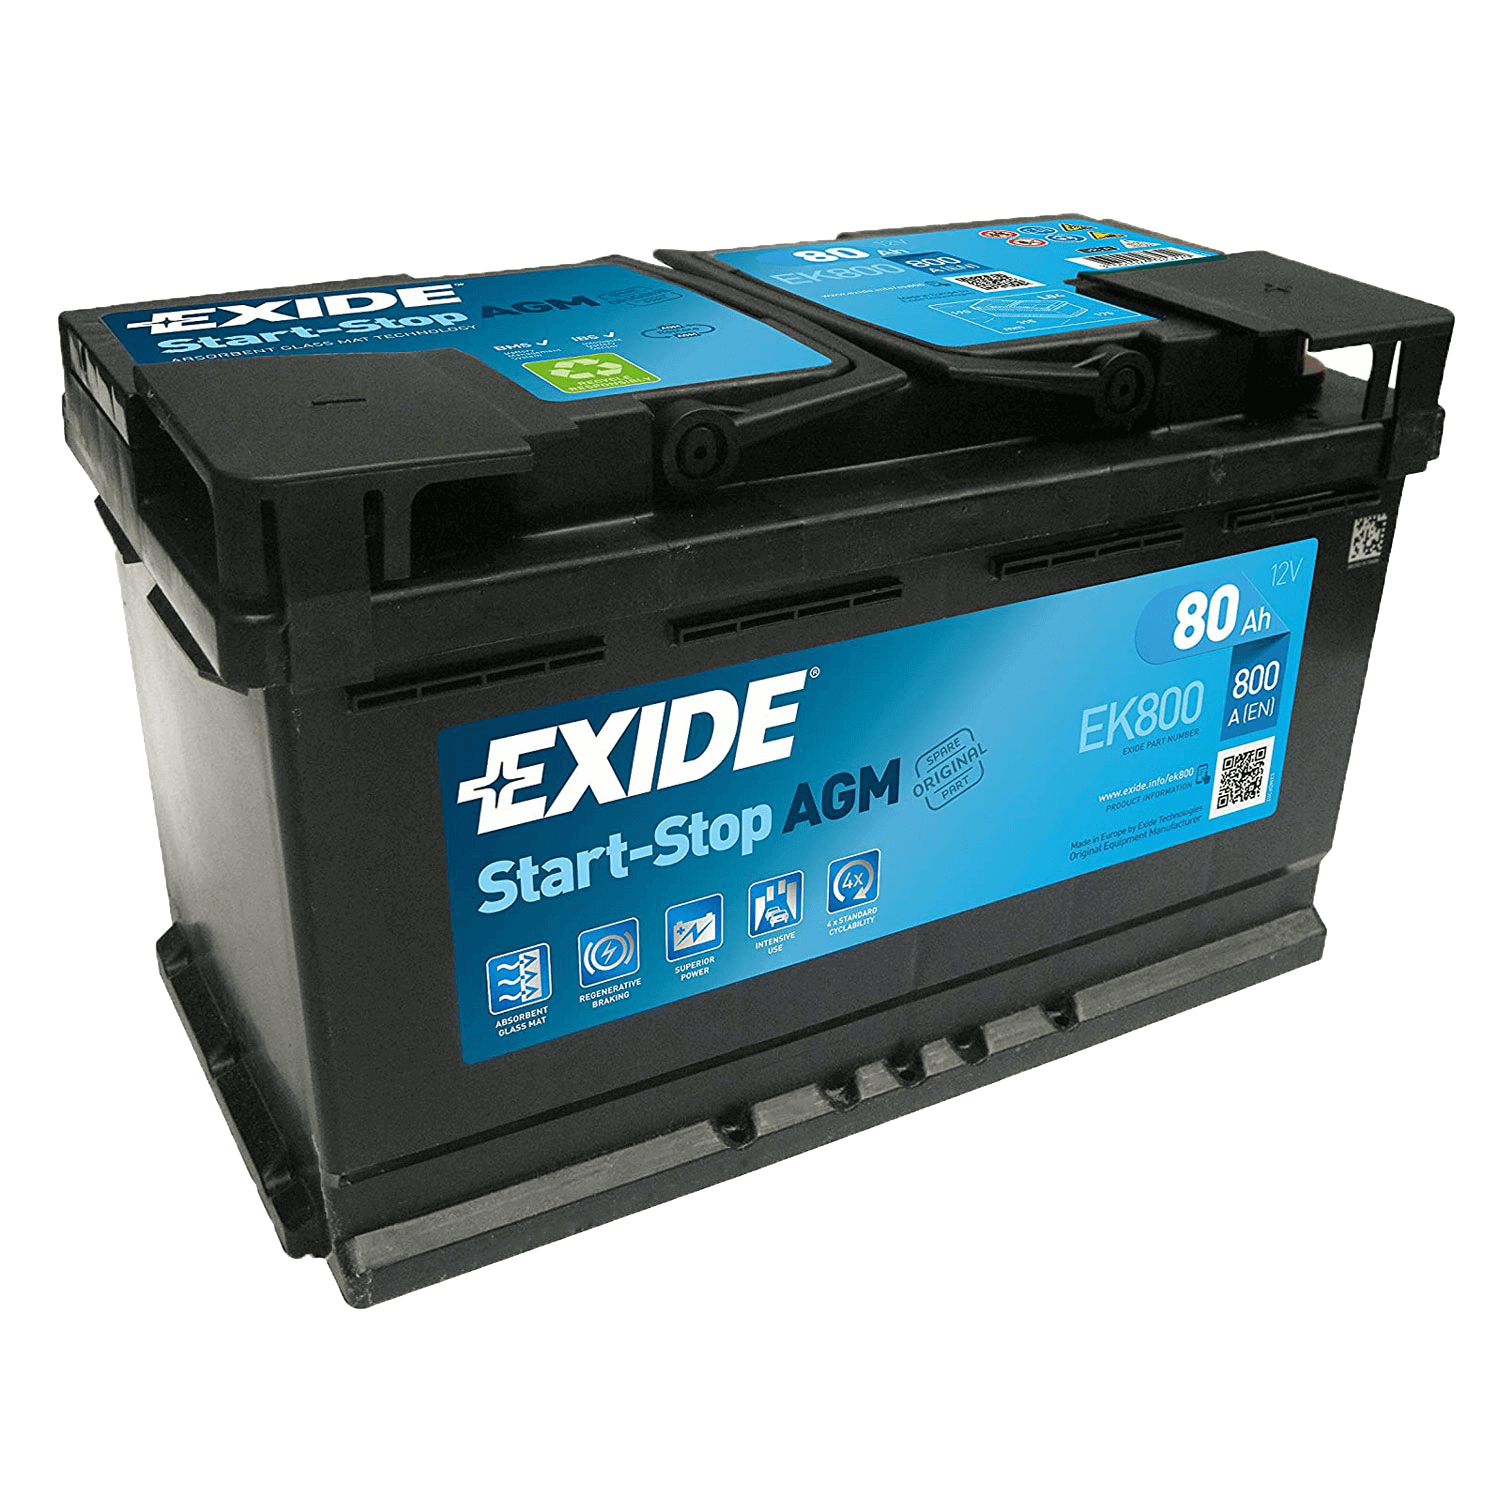 Exide EK800 Start-Stop AGM 12V 80Ah 800A Autobatterie, Starterbatterie, Boot, Batterien für